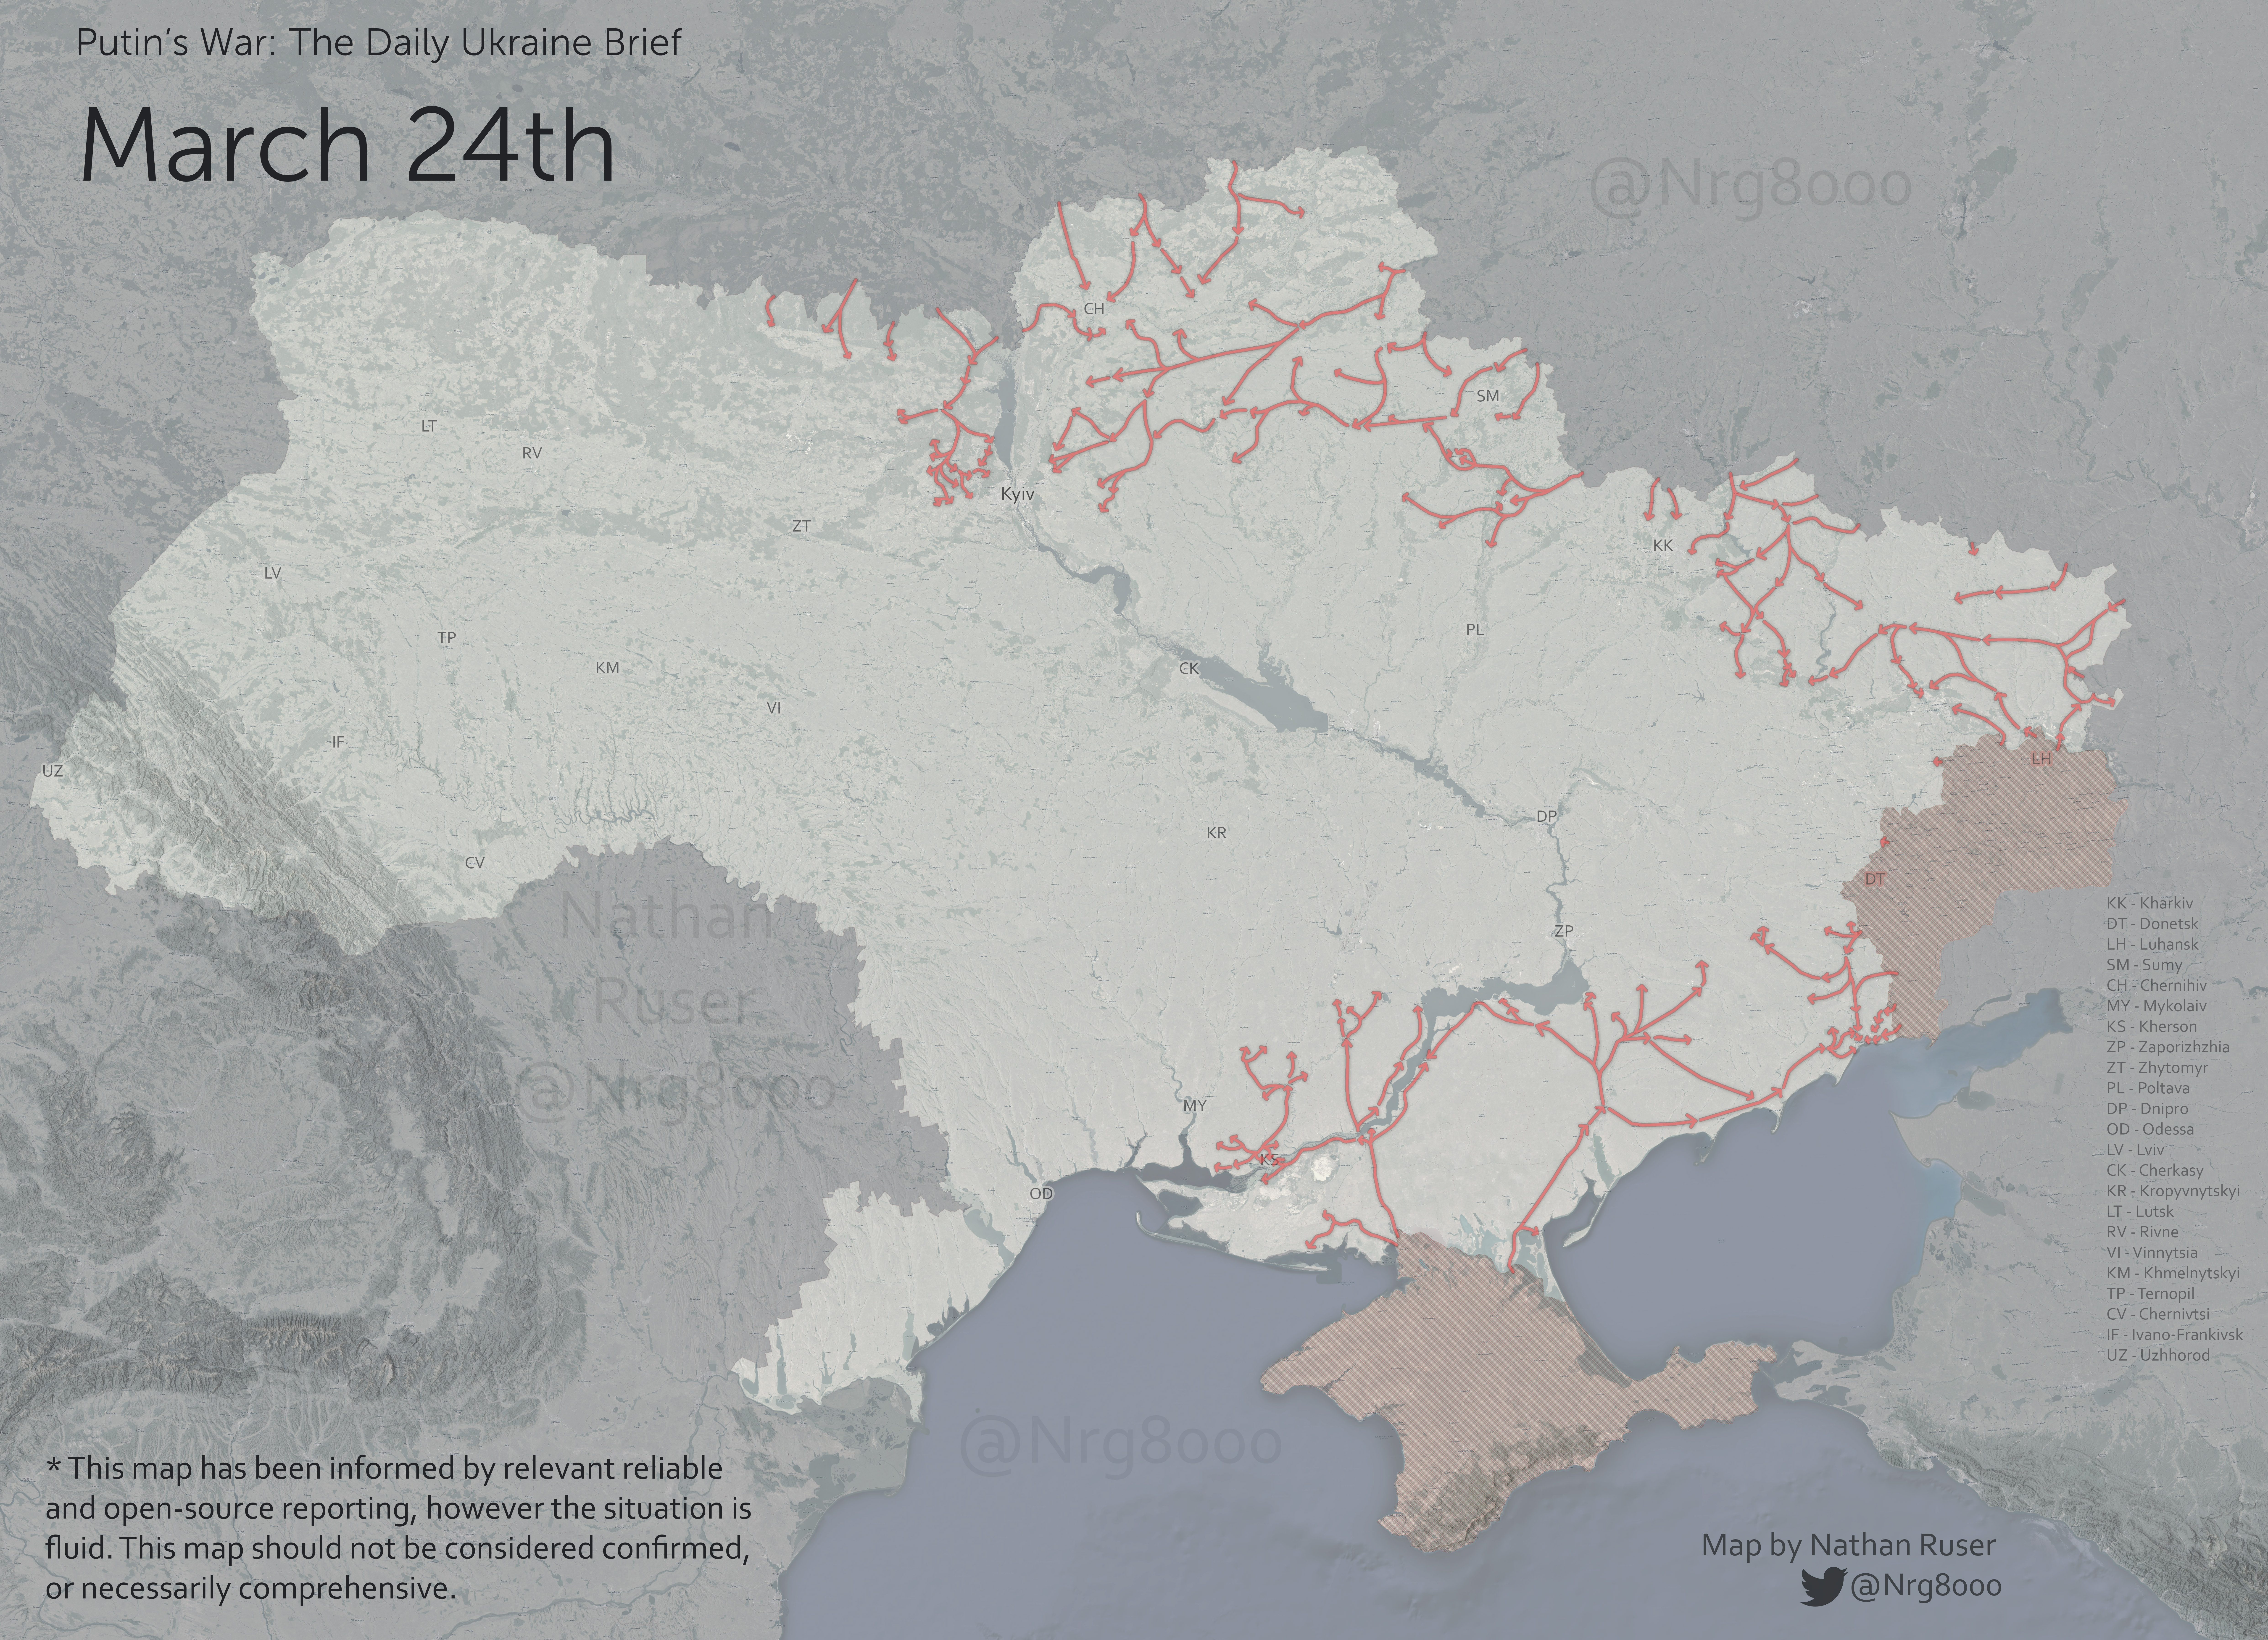 March 24th war map in Ukraine by Nathan Ruser